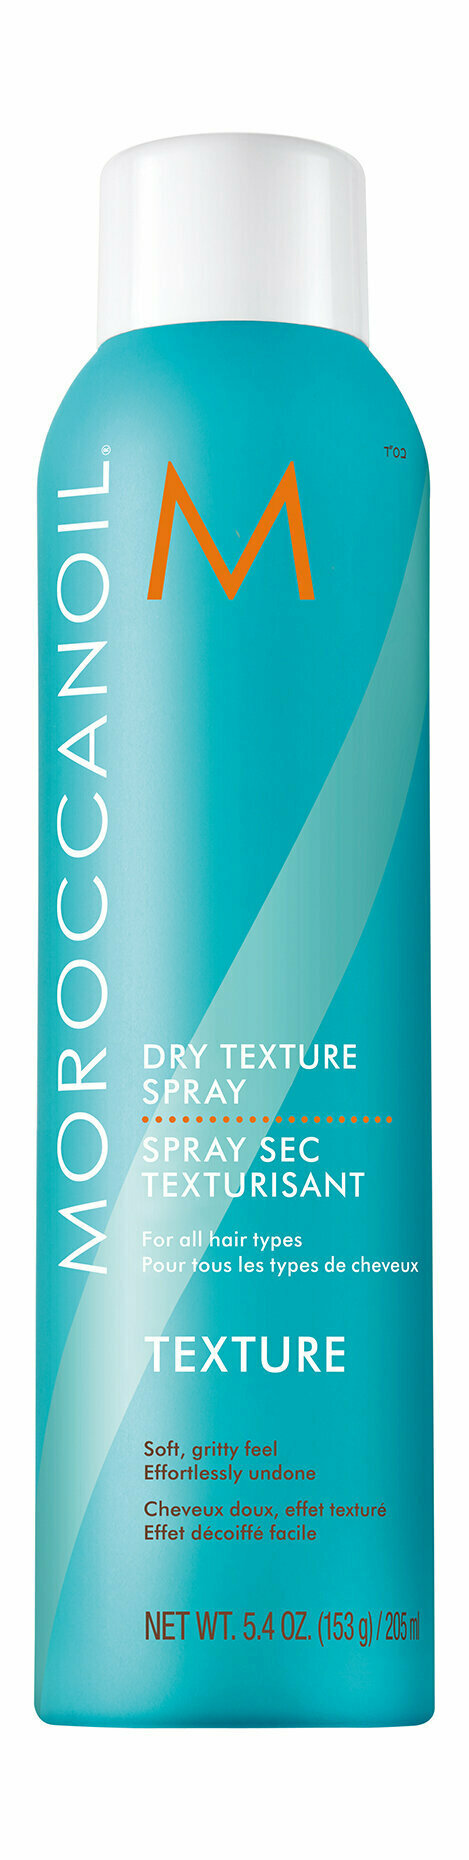 Moroccanoil Dry Texture Spray - Сухой текстурирующий спрей 205 мл